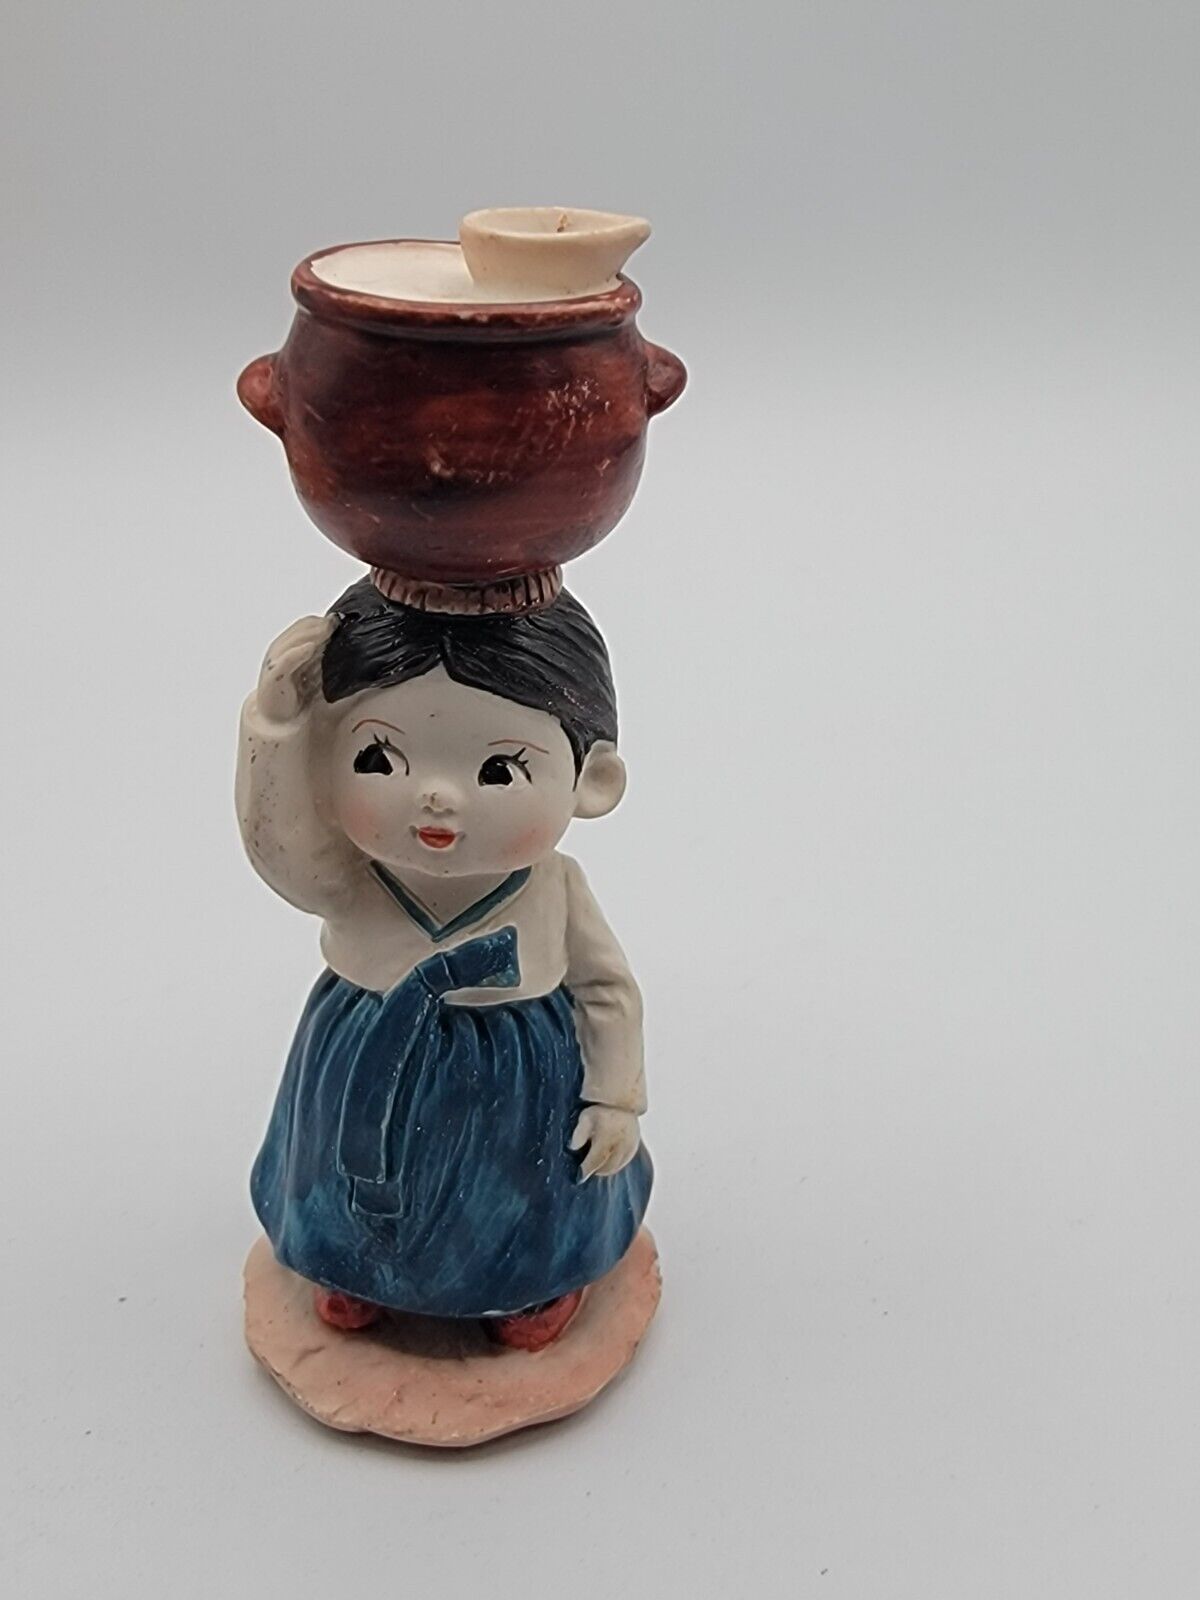 Vintage Koreart Figurine Girl Carrying Bowl on Head KOREAN Ceramic Figurine 